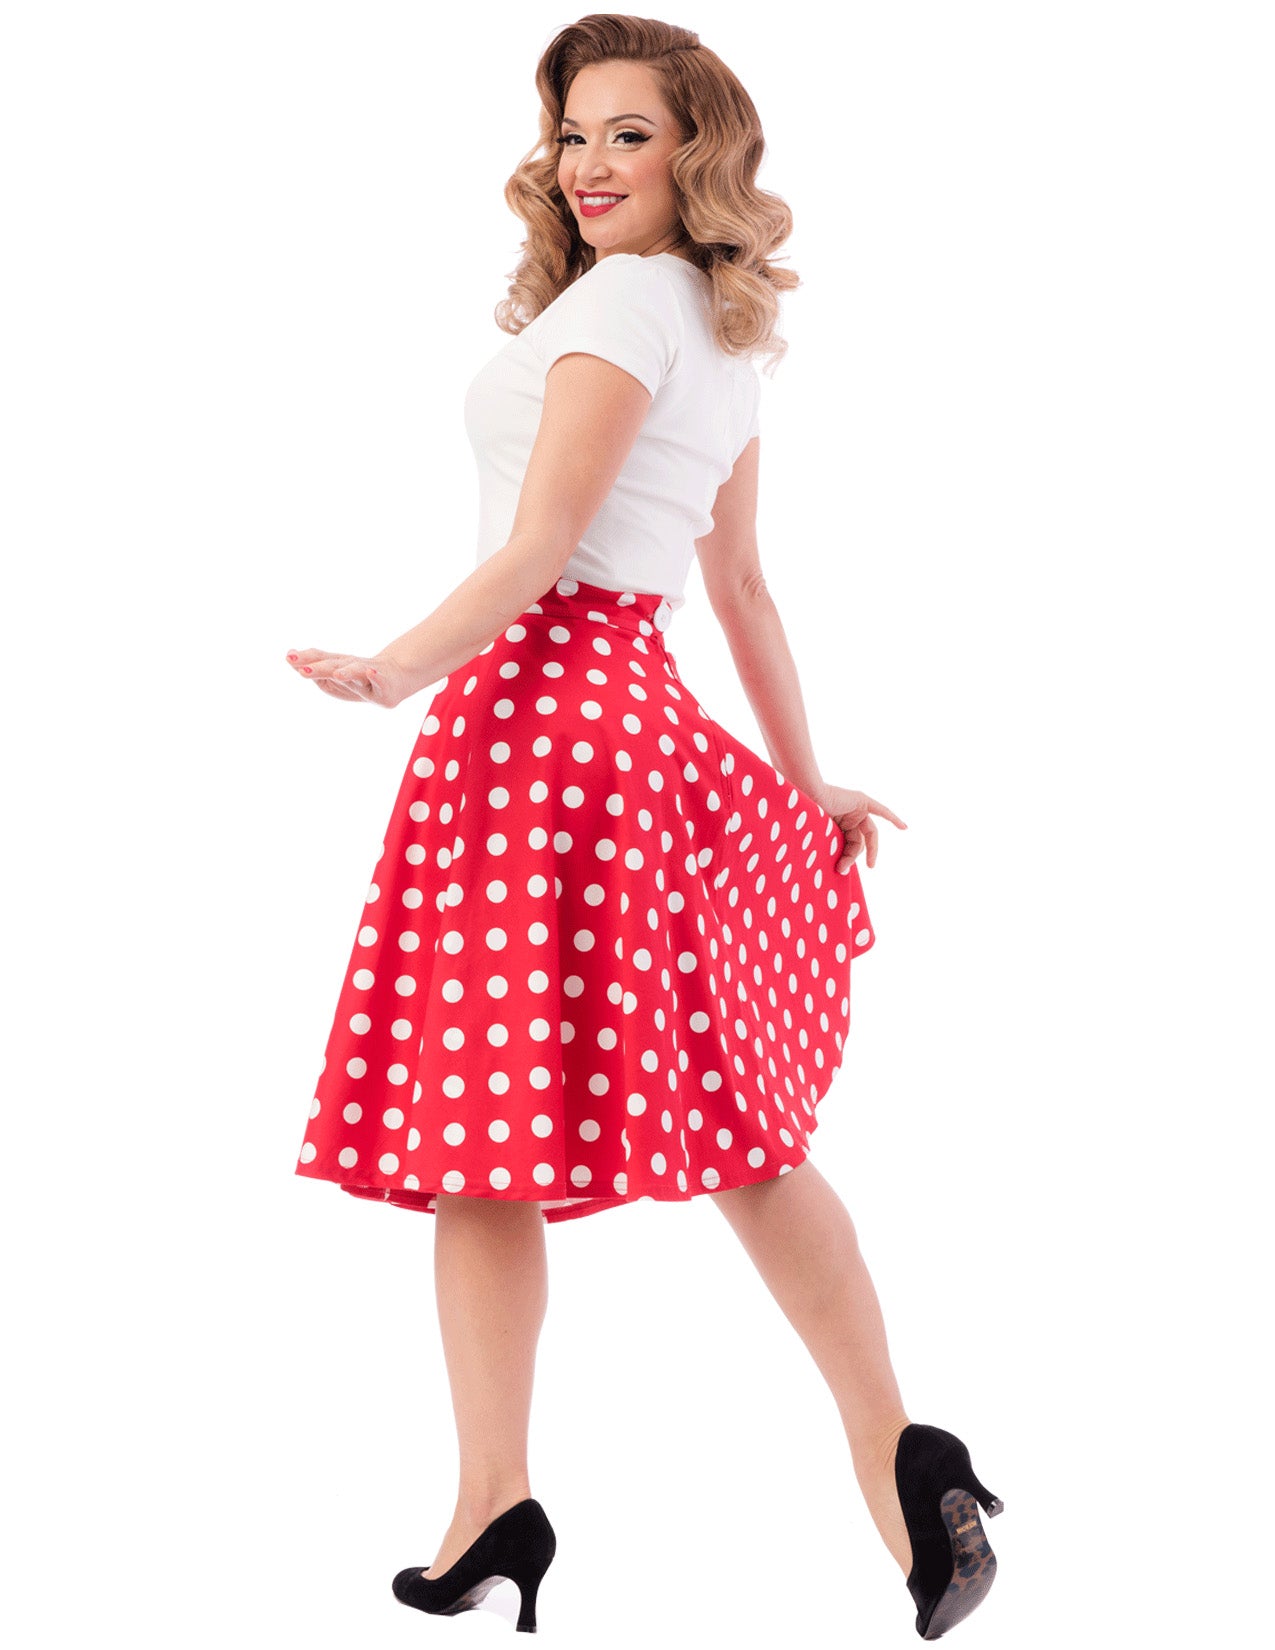 Shop Dot Thrills Skirt in Red/White Online Clothing